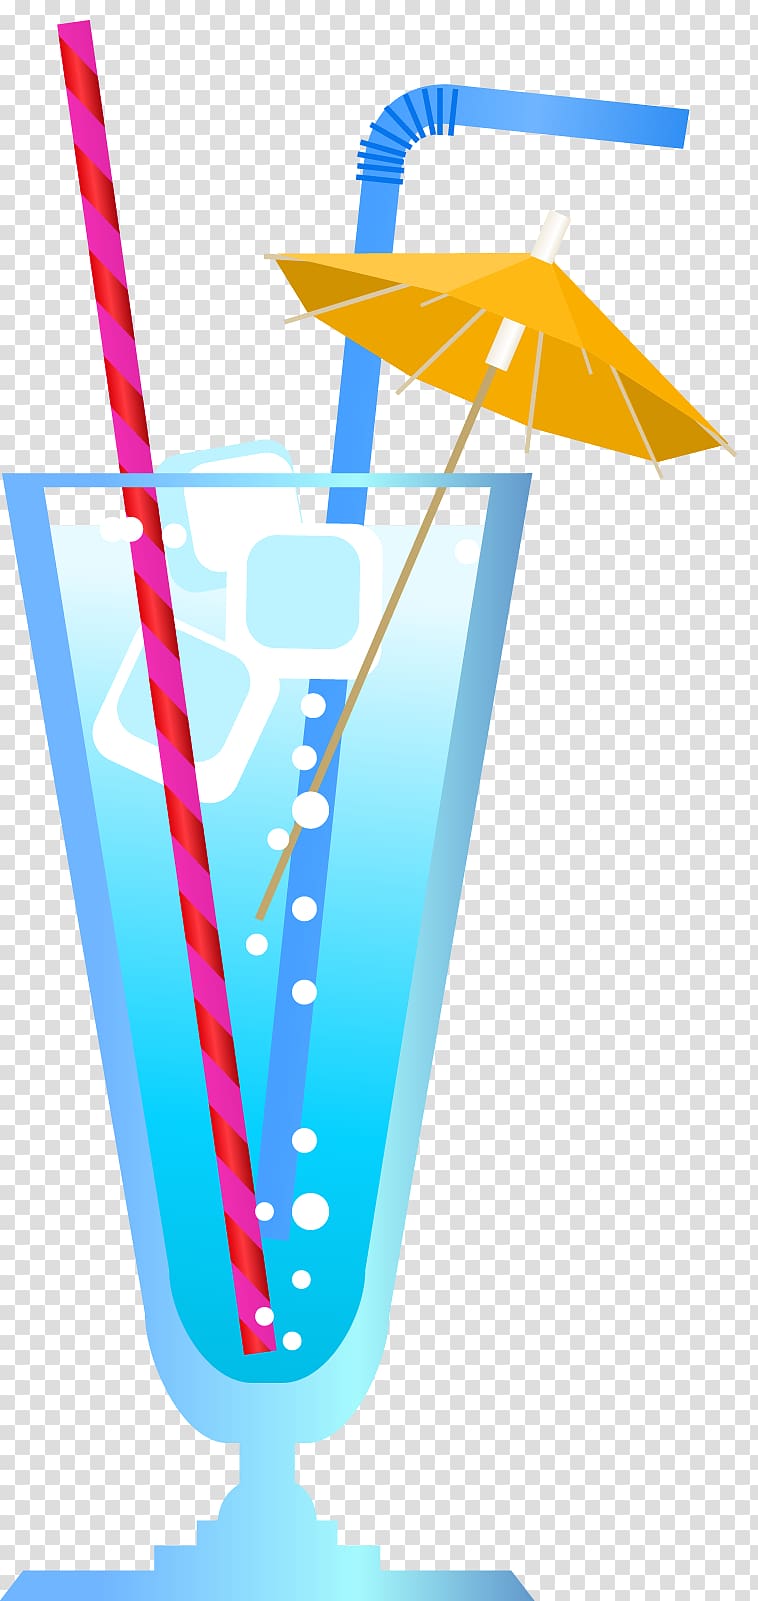 Cartoon Summer , Blue drink cup transparent background PNG clipart